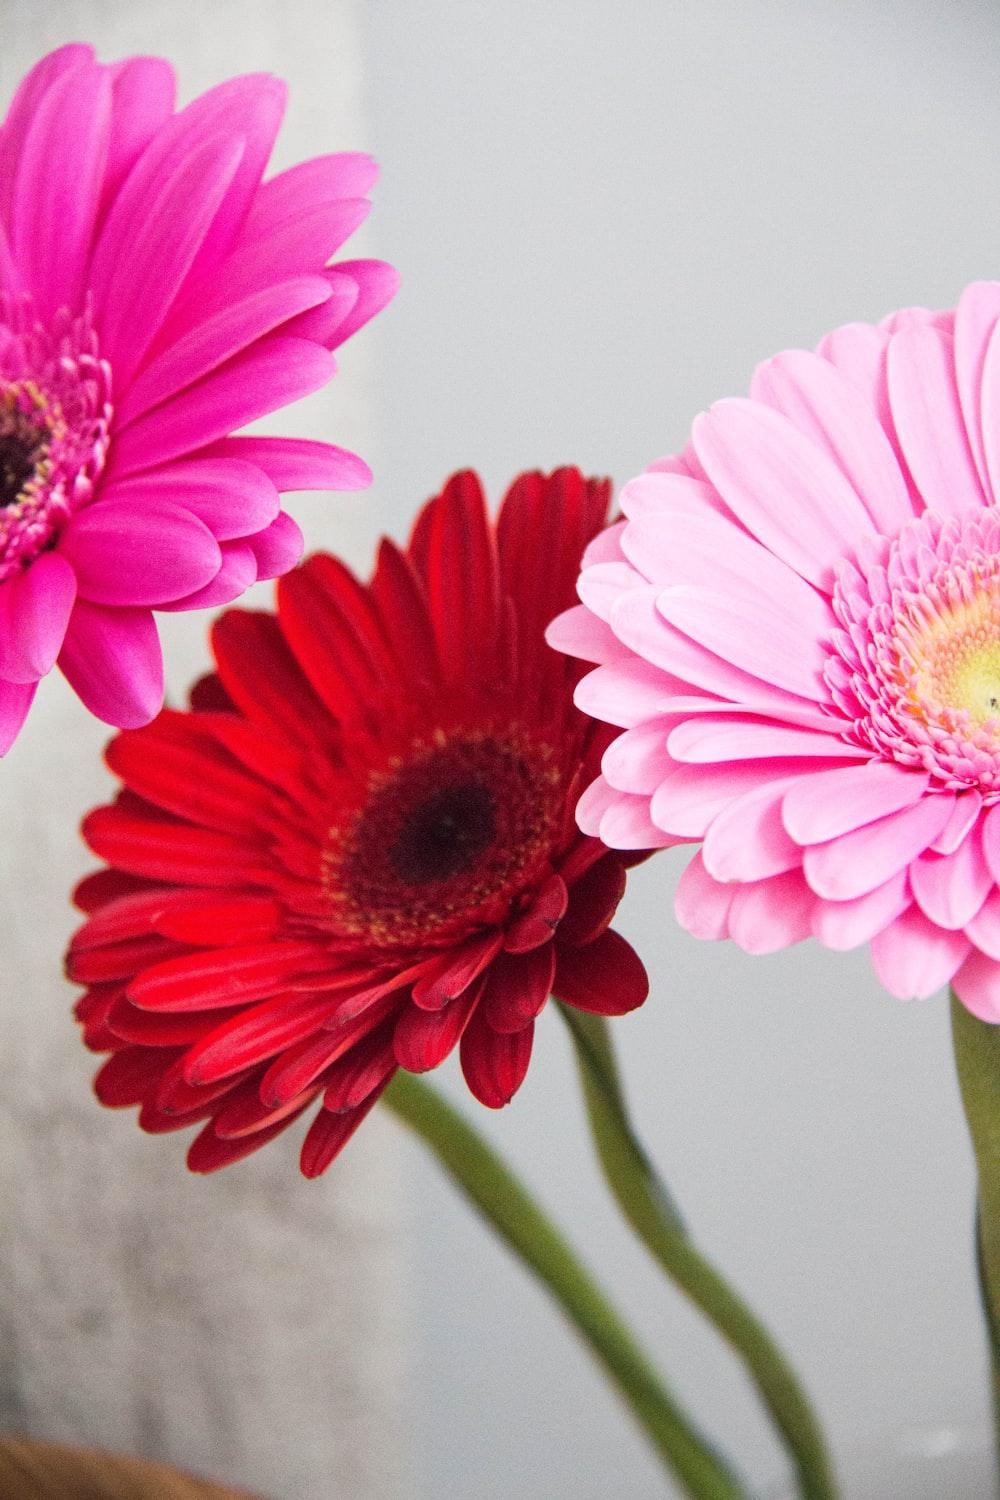 Pink Gerber Daisy Wallpapers - Top Free Pink Gerber Daisy Backgrounds ...